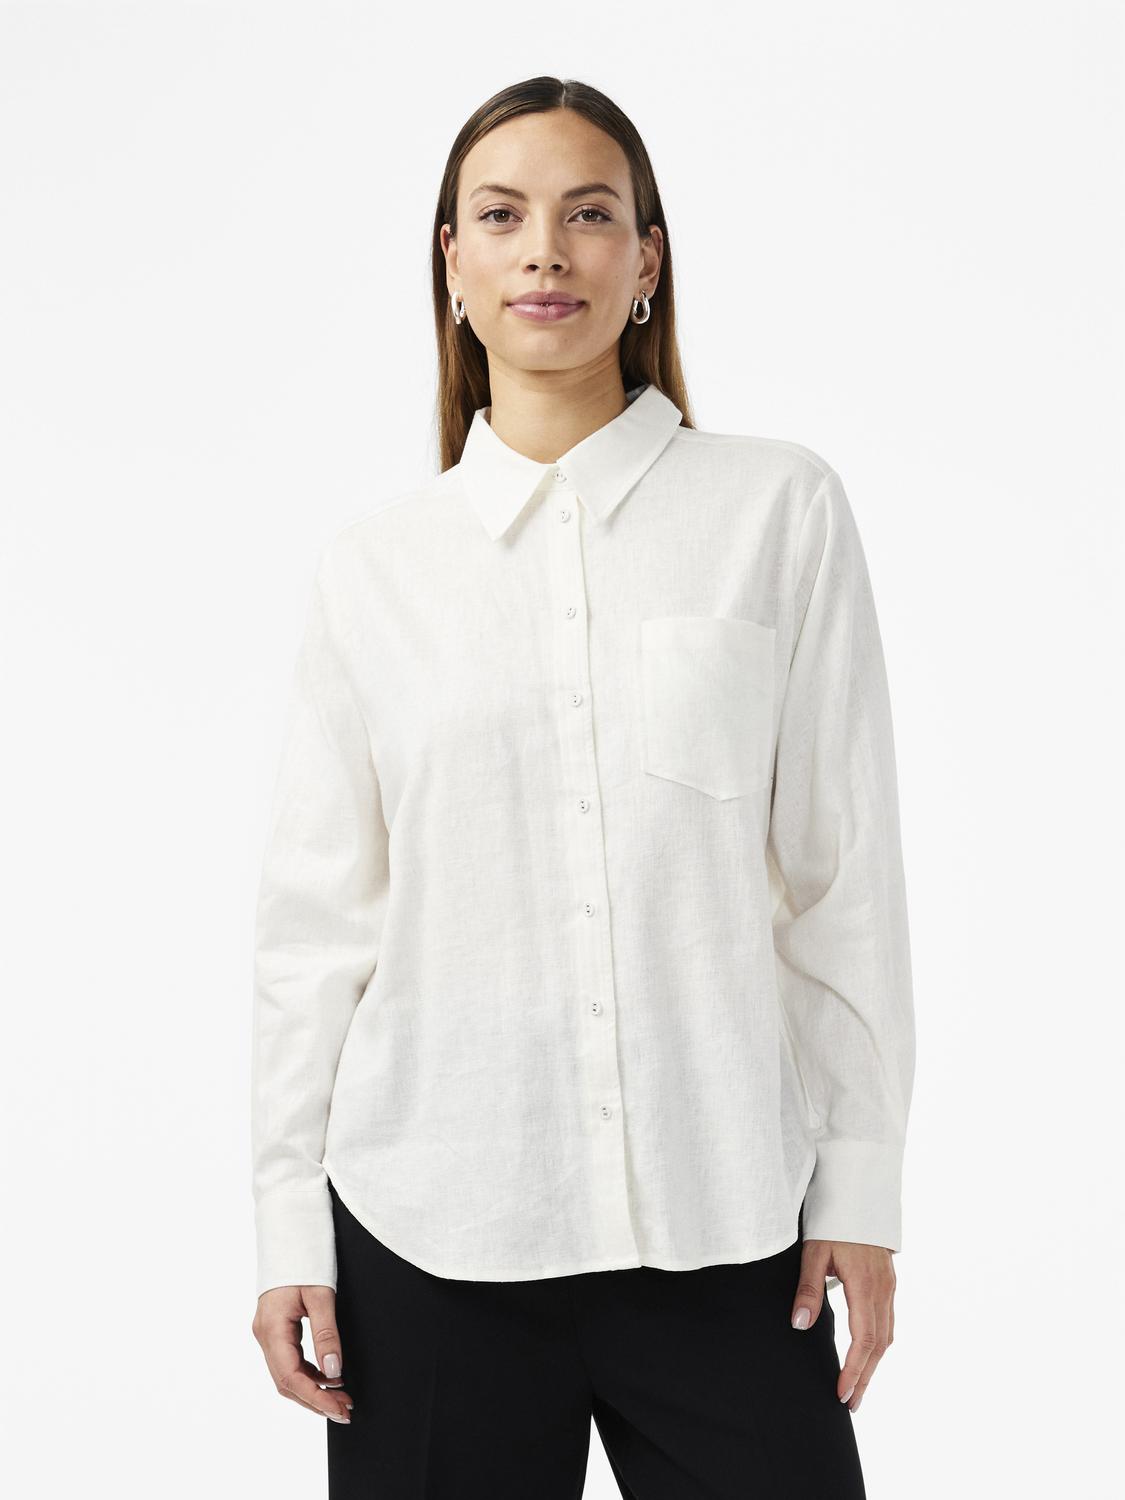 YASFLAXY Shirts - Star White